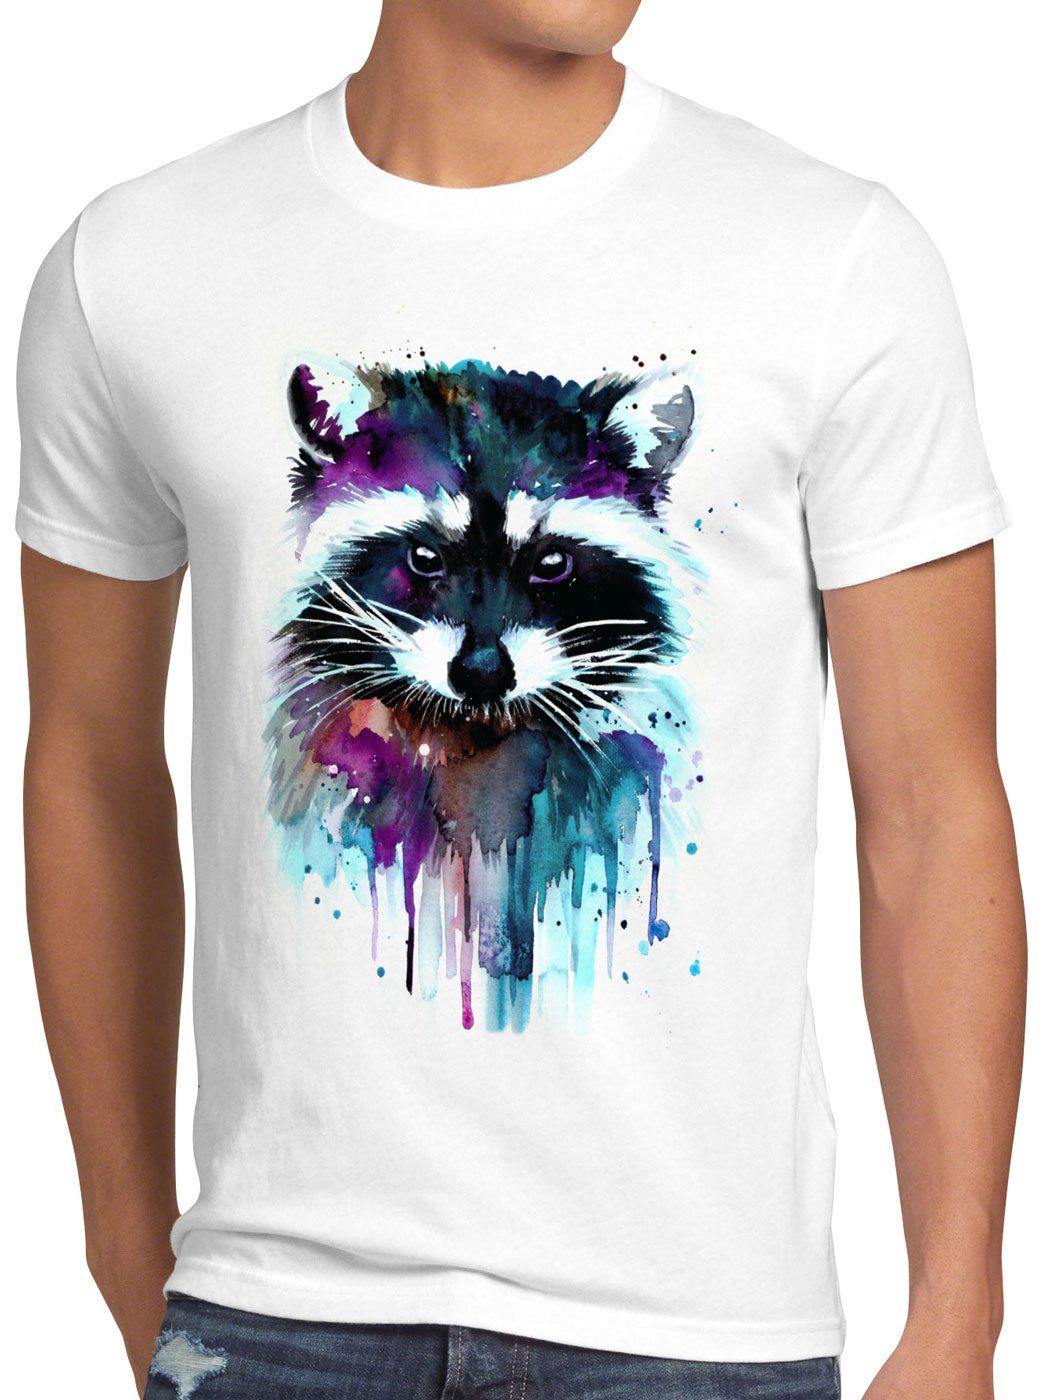 style3 Print-Shirt Herren T-Shirt Aquarell Waschbär raccoon zoo